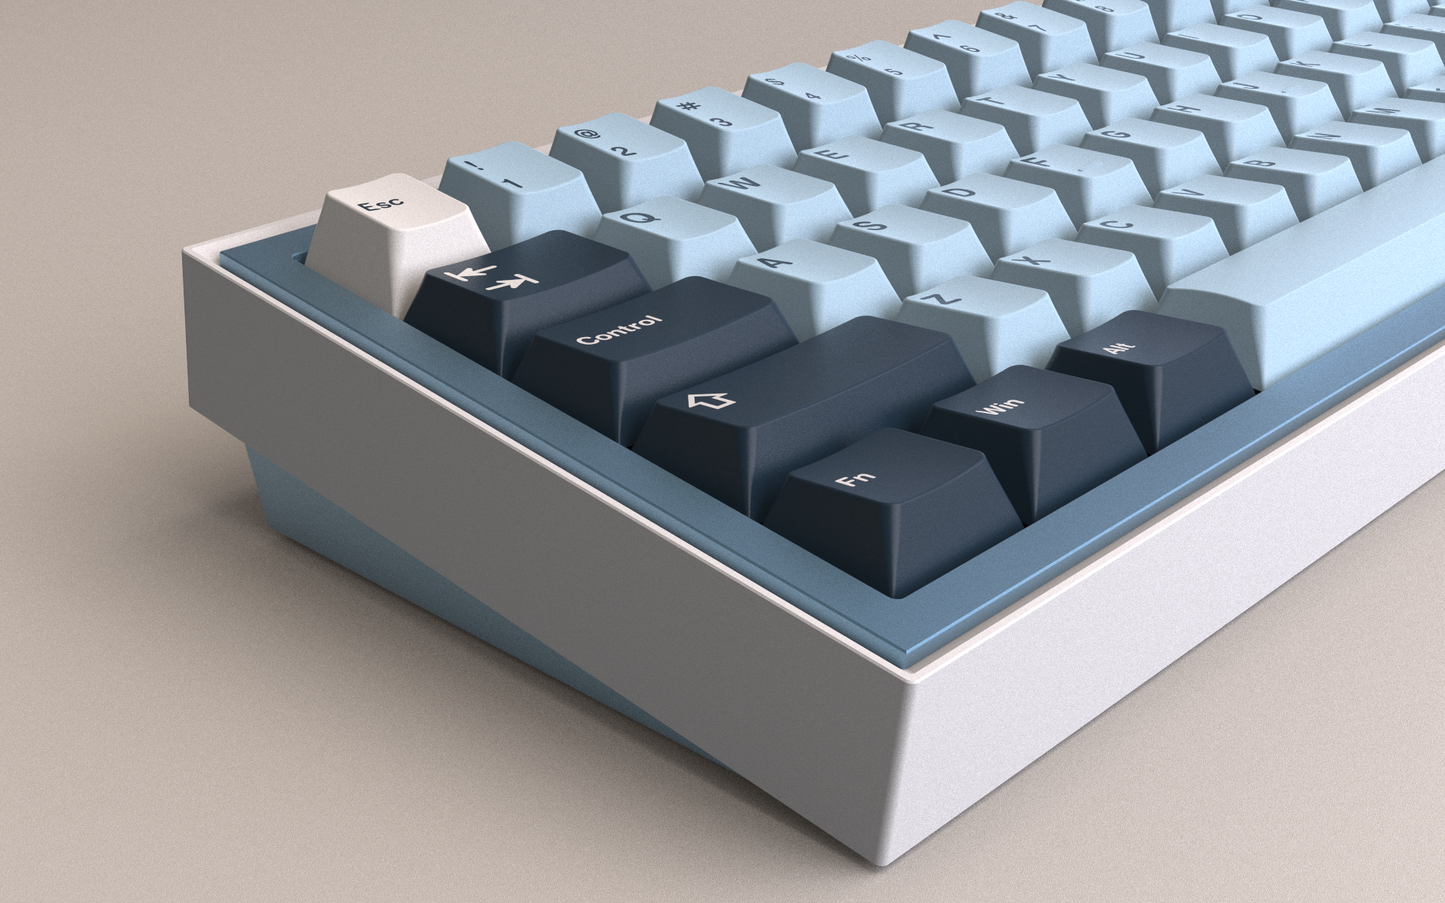 [Pre-order]Frusta Fundamental 65% keyboard kit